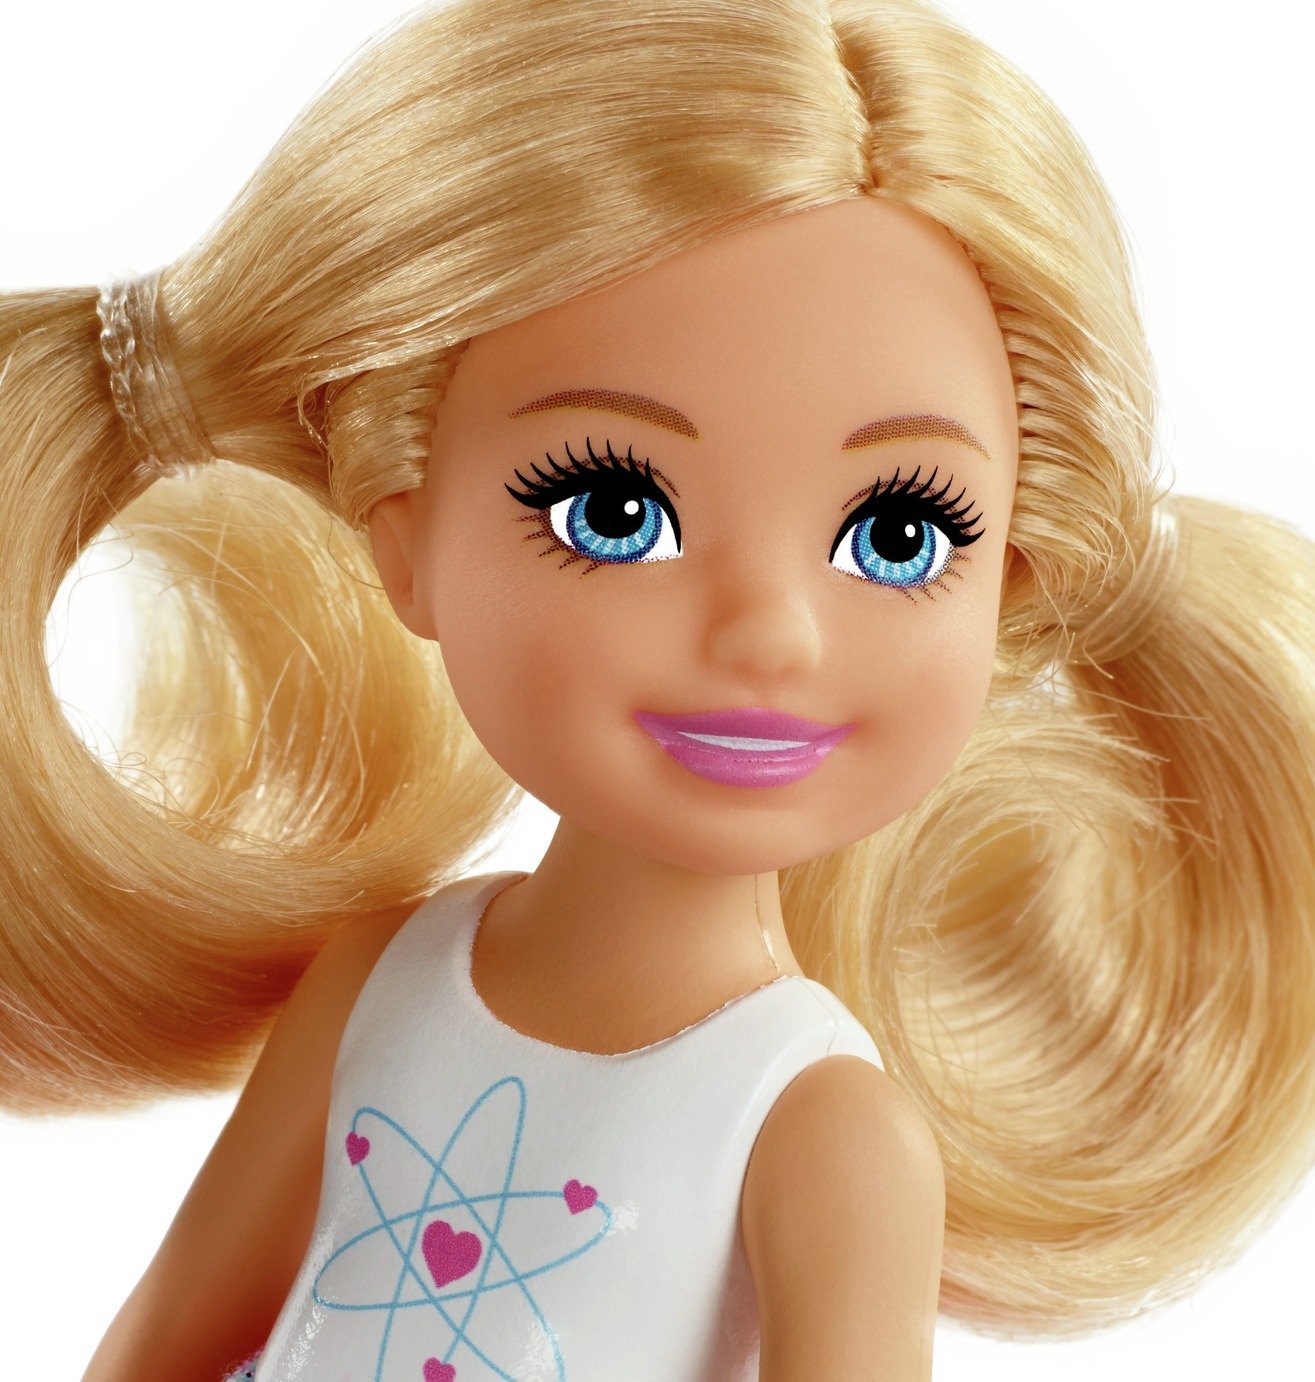 Barbie Dreamhouse Adventures Chelsea Travel Doll Review